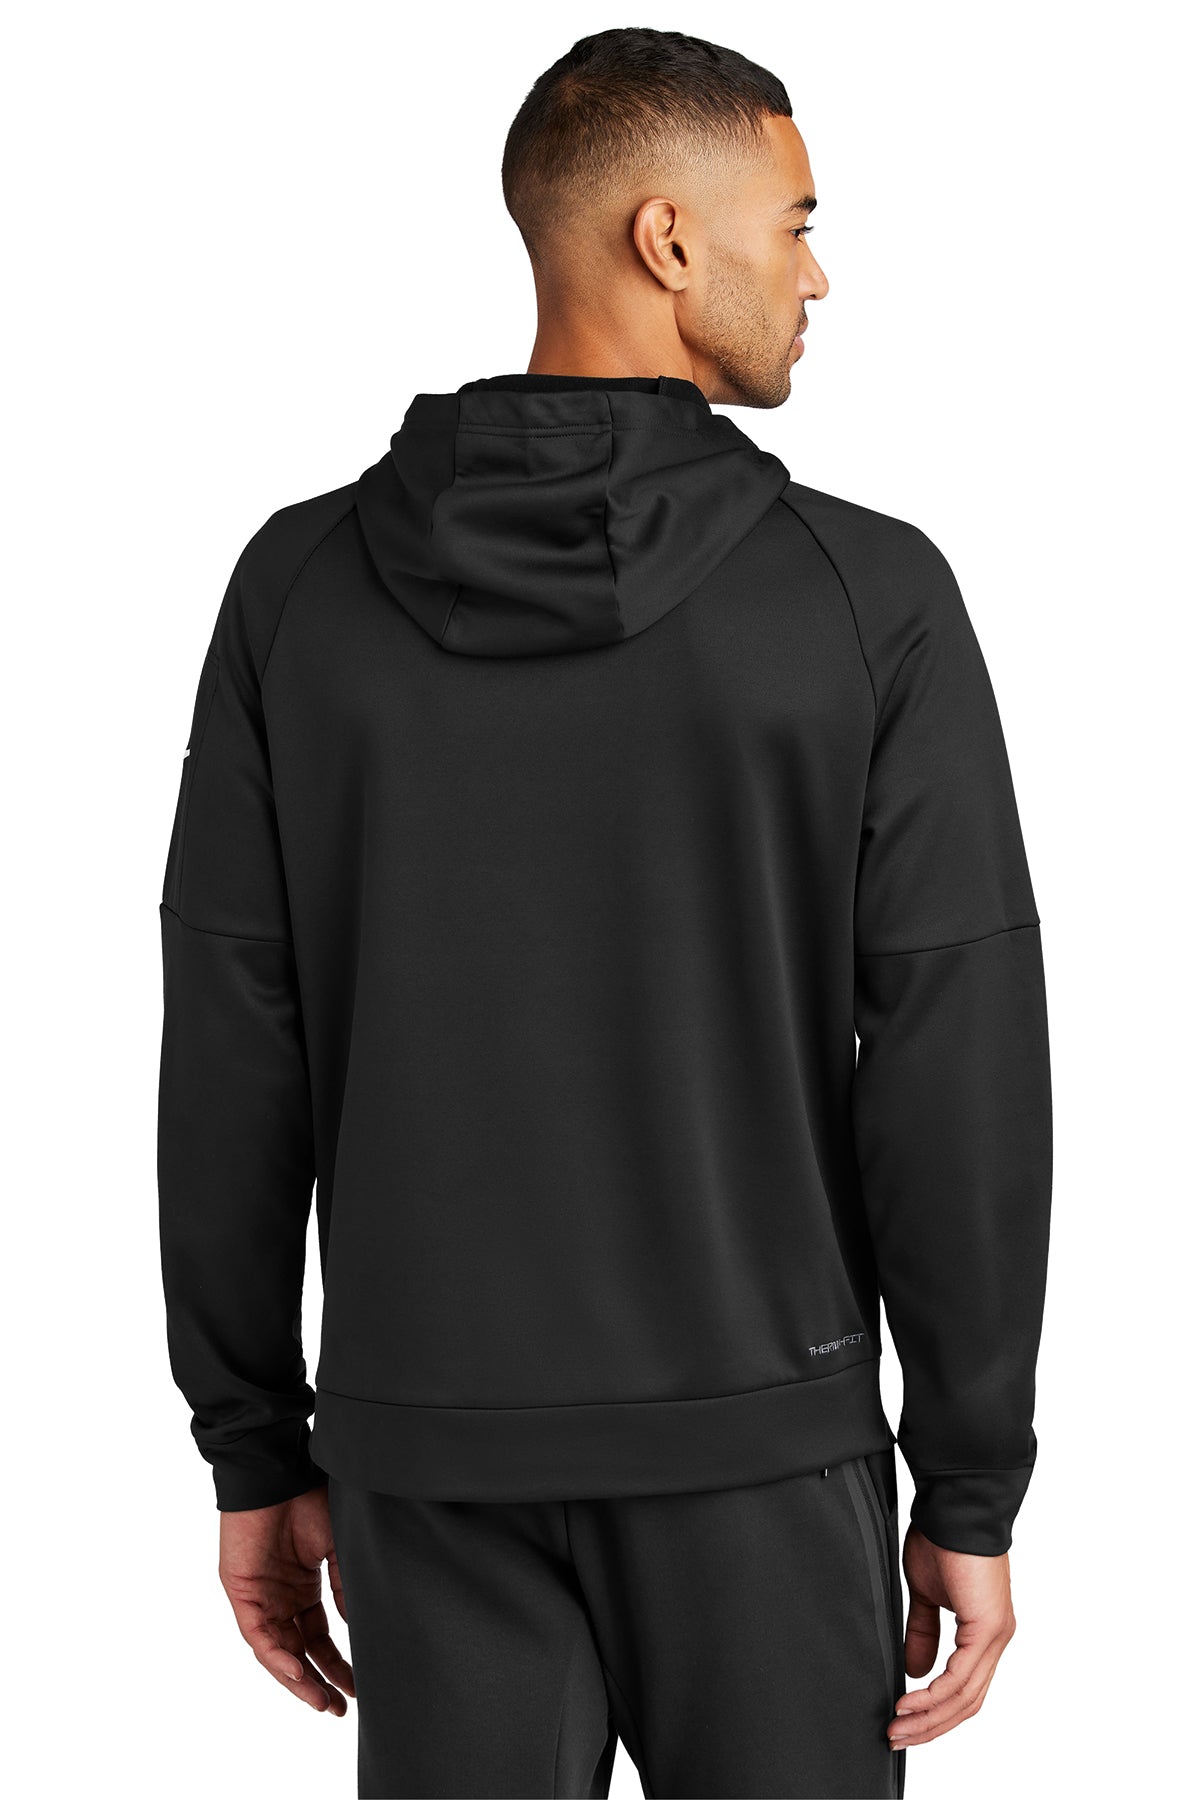 Nike Therma-FIT Pocket Pullover Branded Hoodies, Black